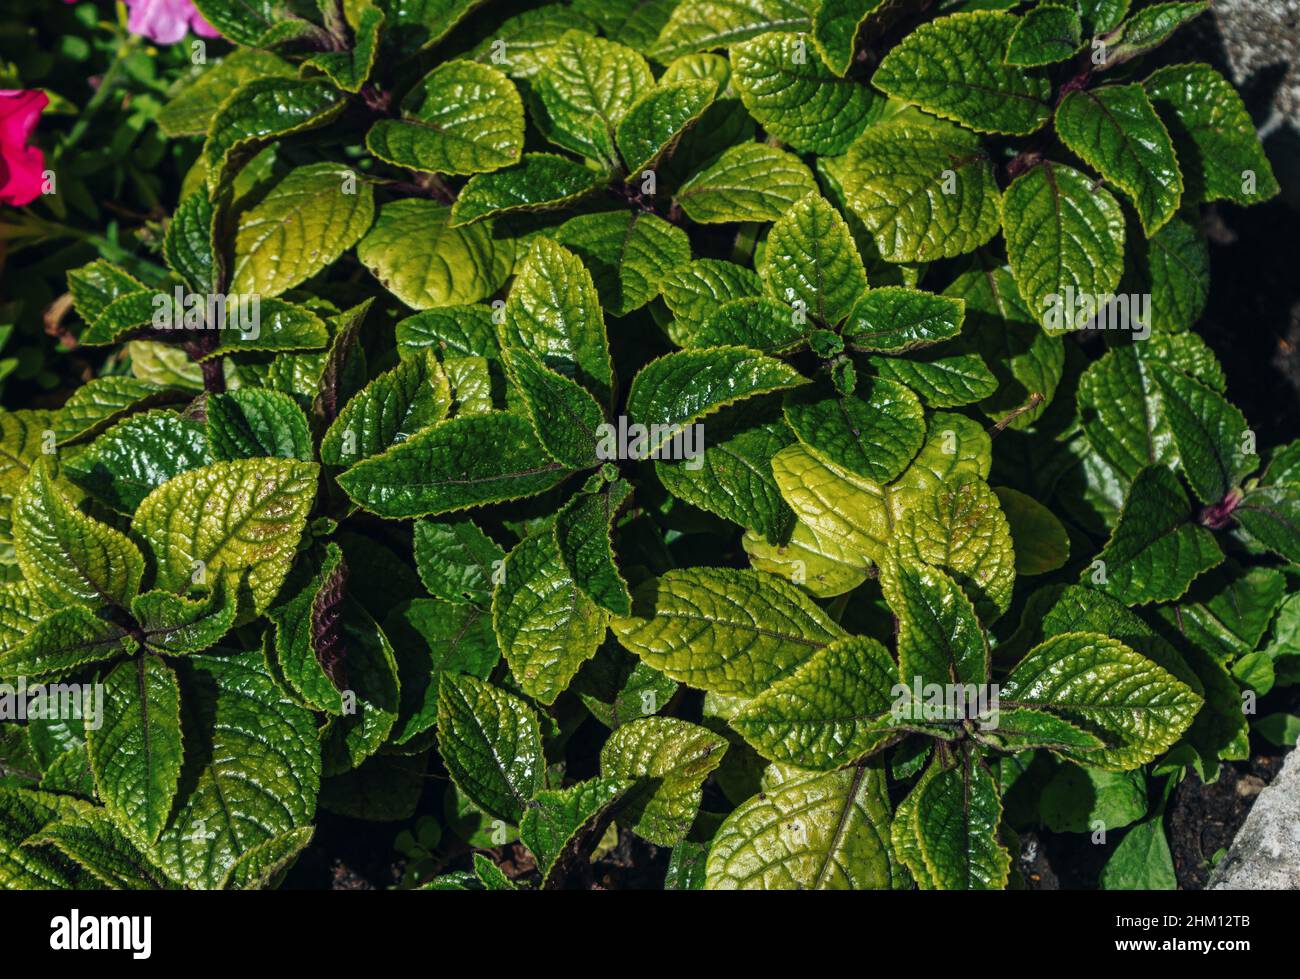 Plectranthus purpuratus or Swedish ivy - decorative mint, hybrid plant, abstract natural background Stock Photo